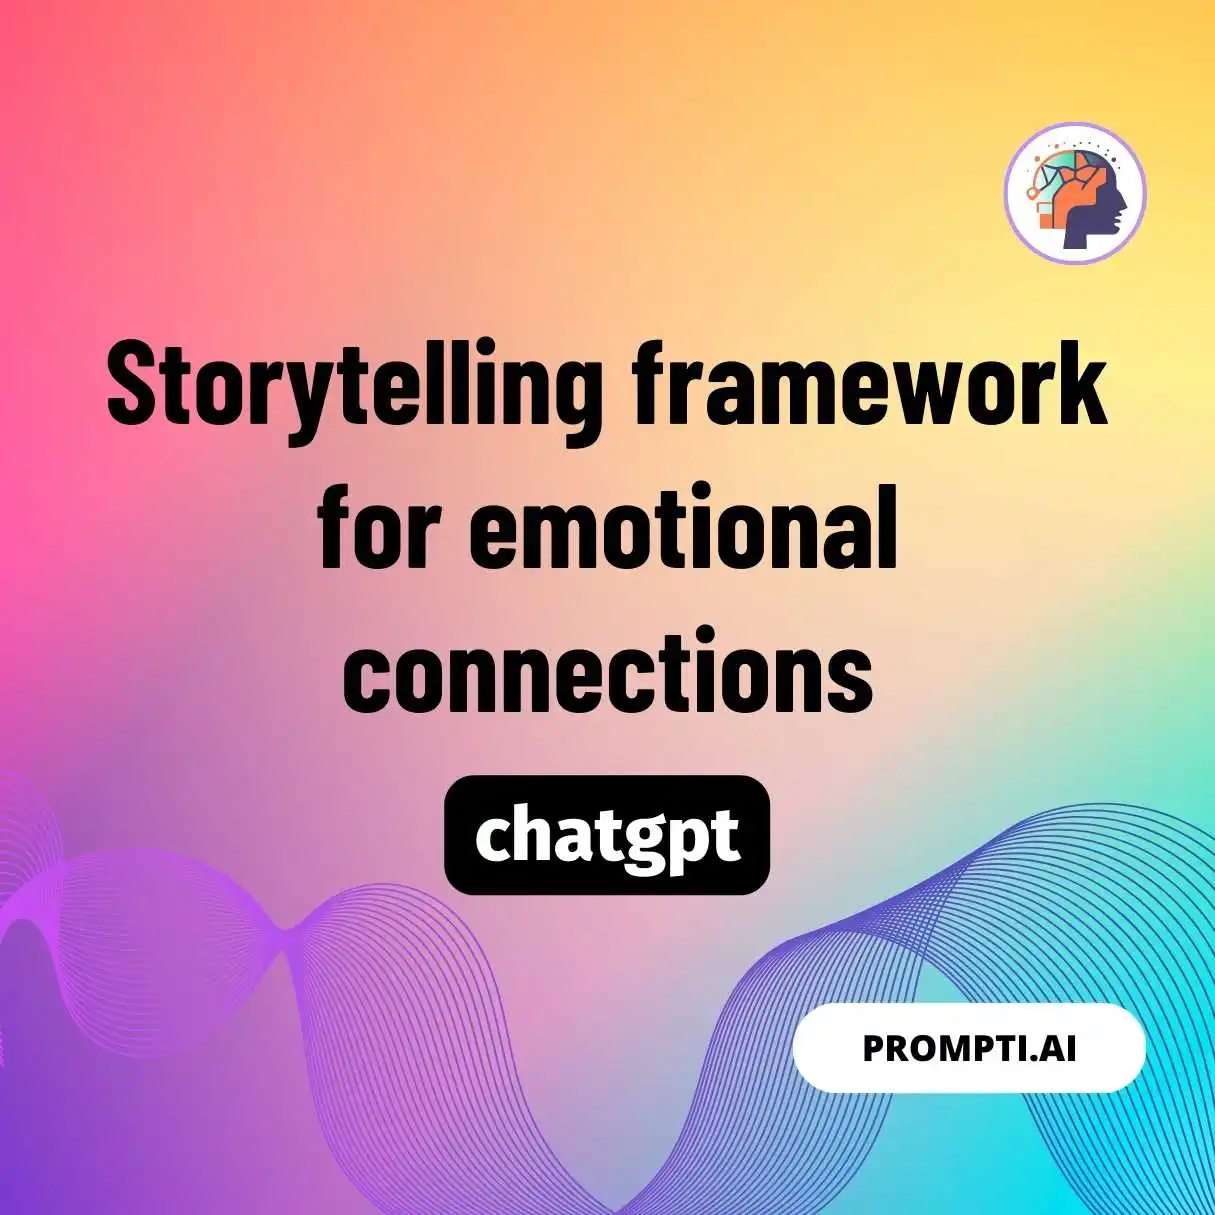 Storytelling framework for emotional connections